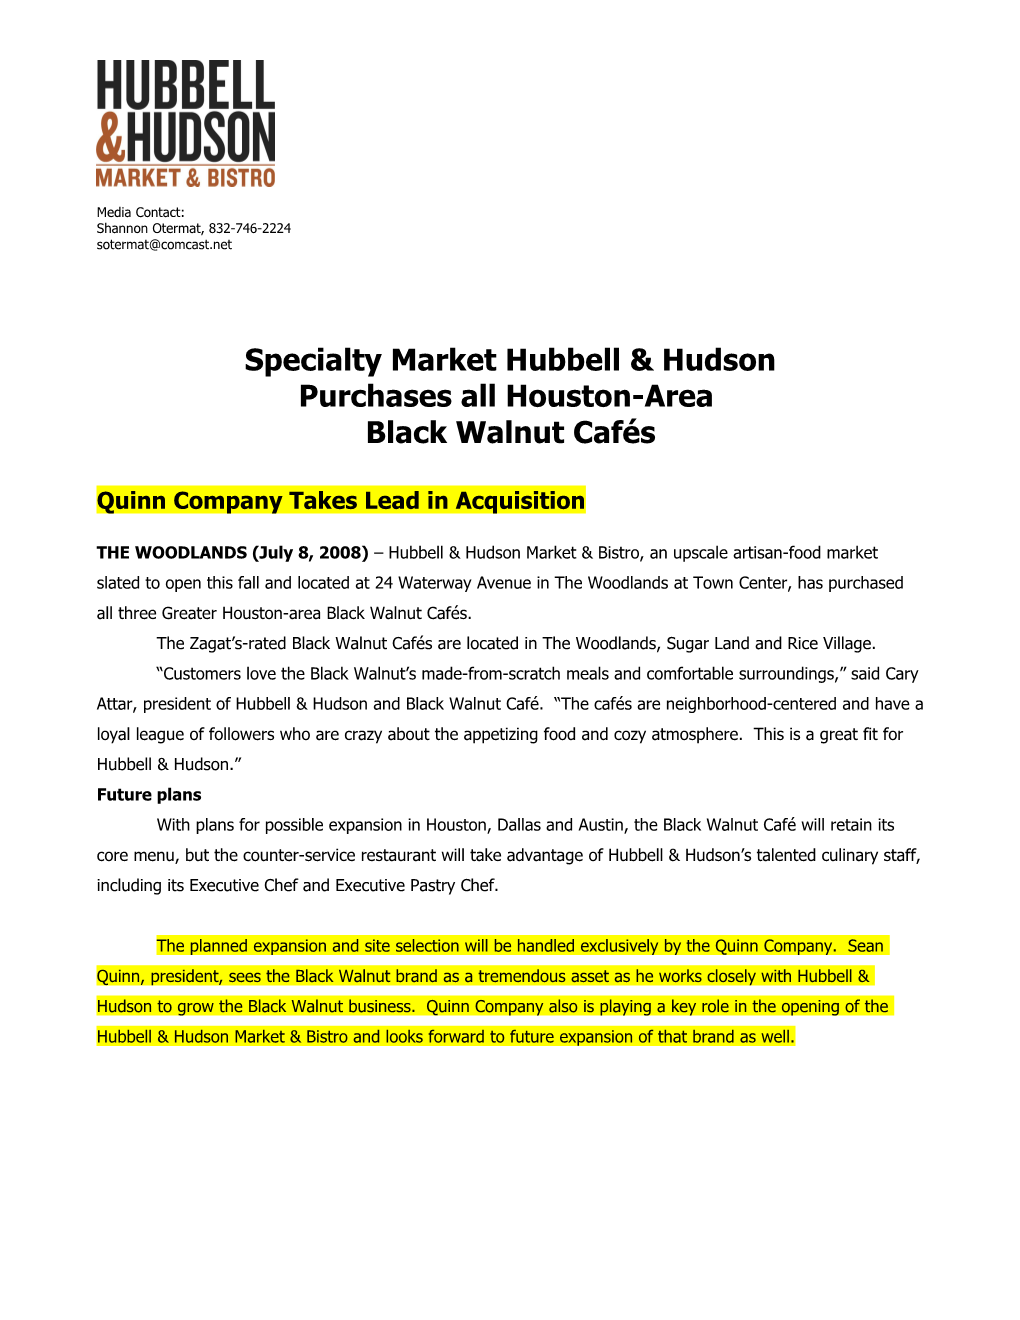 Specialty Market Hubbell & Hudson